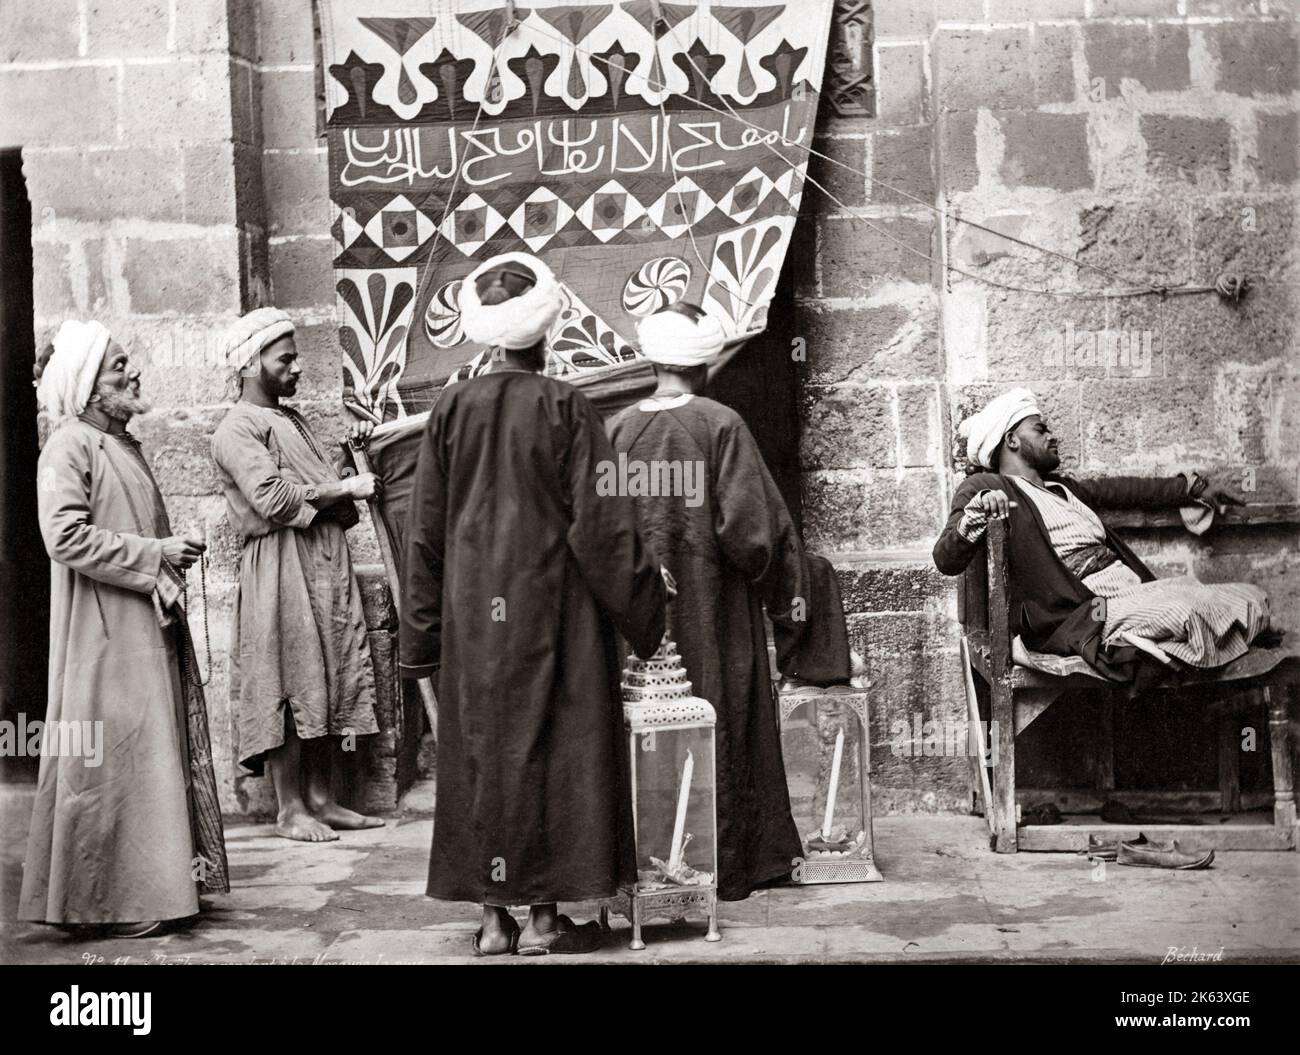 Muslimische Männer beten, Ägypten, um 1880. Stockfoto